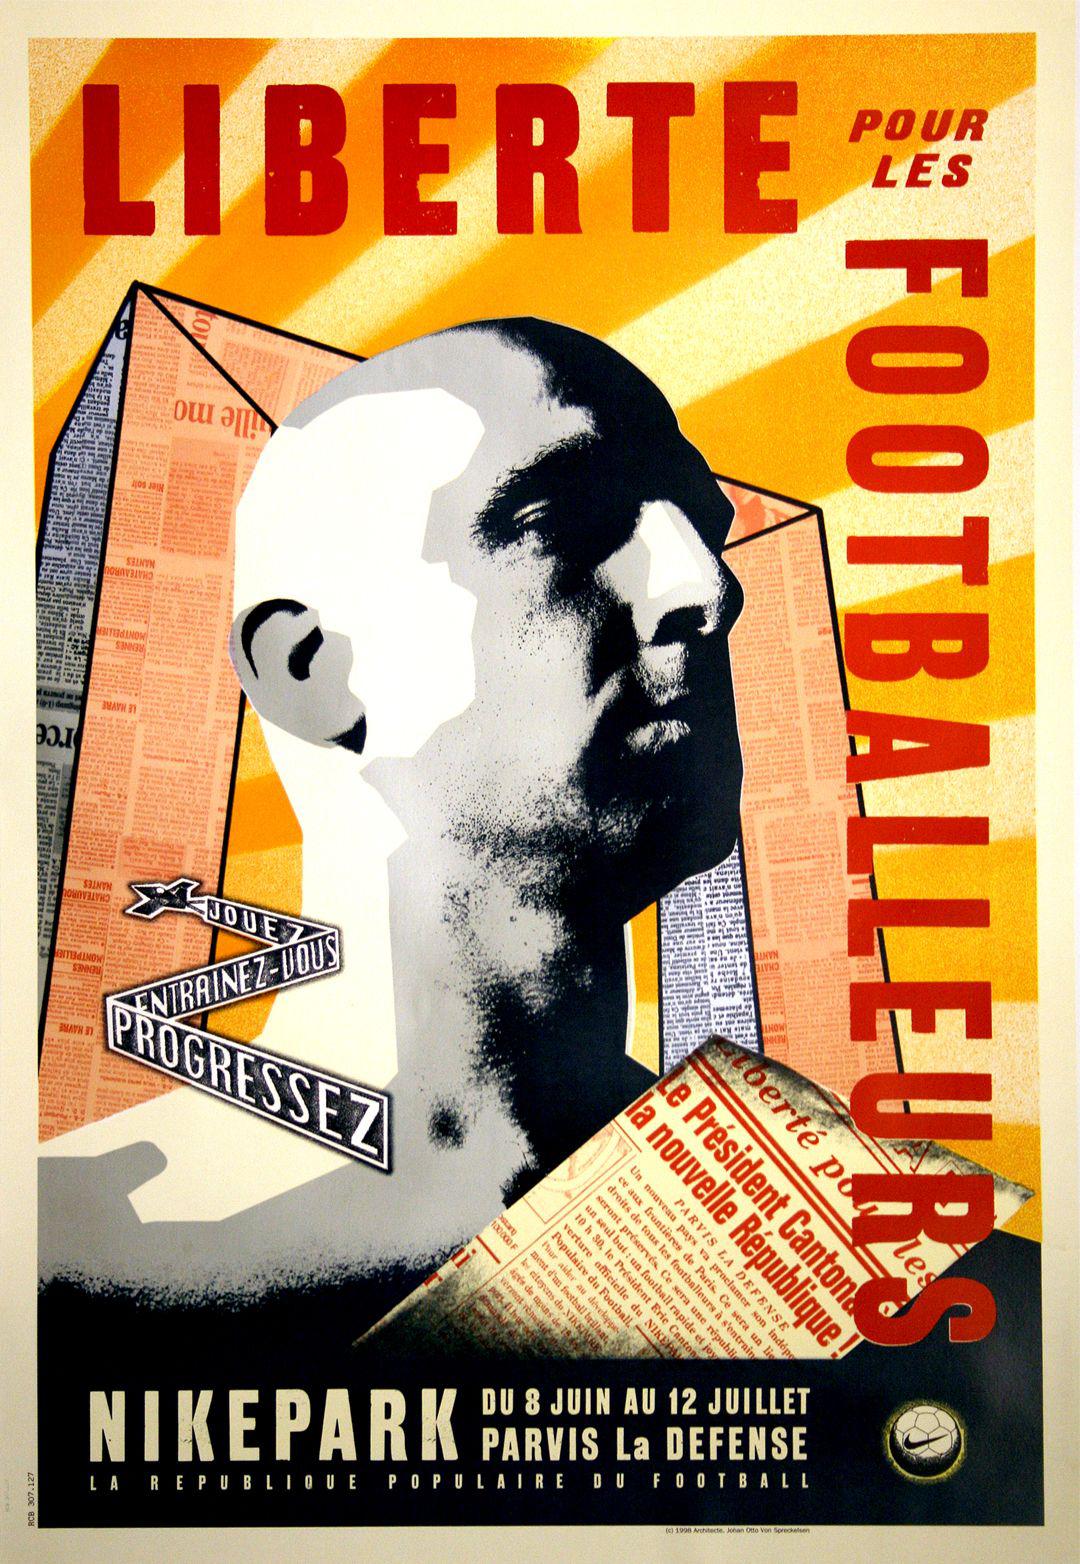 Nike Park Poster 1998 Original - Liberte Pour Les Footballeurs by Johan Otto Von Spreckelesen